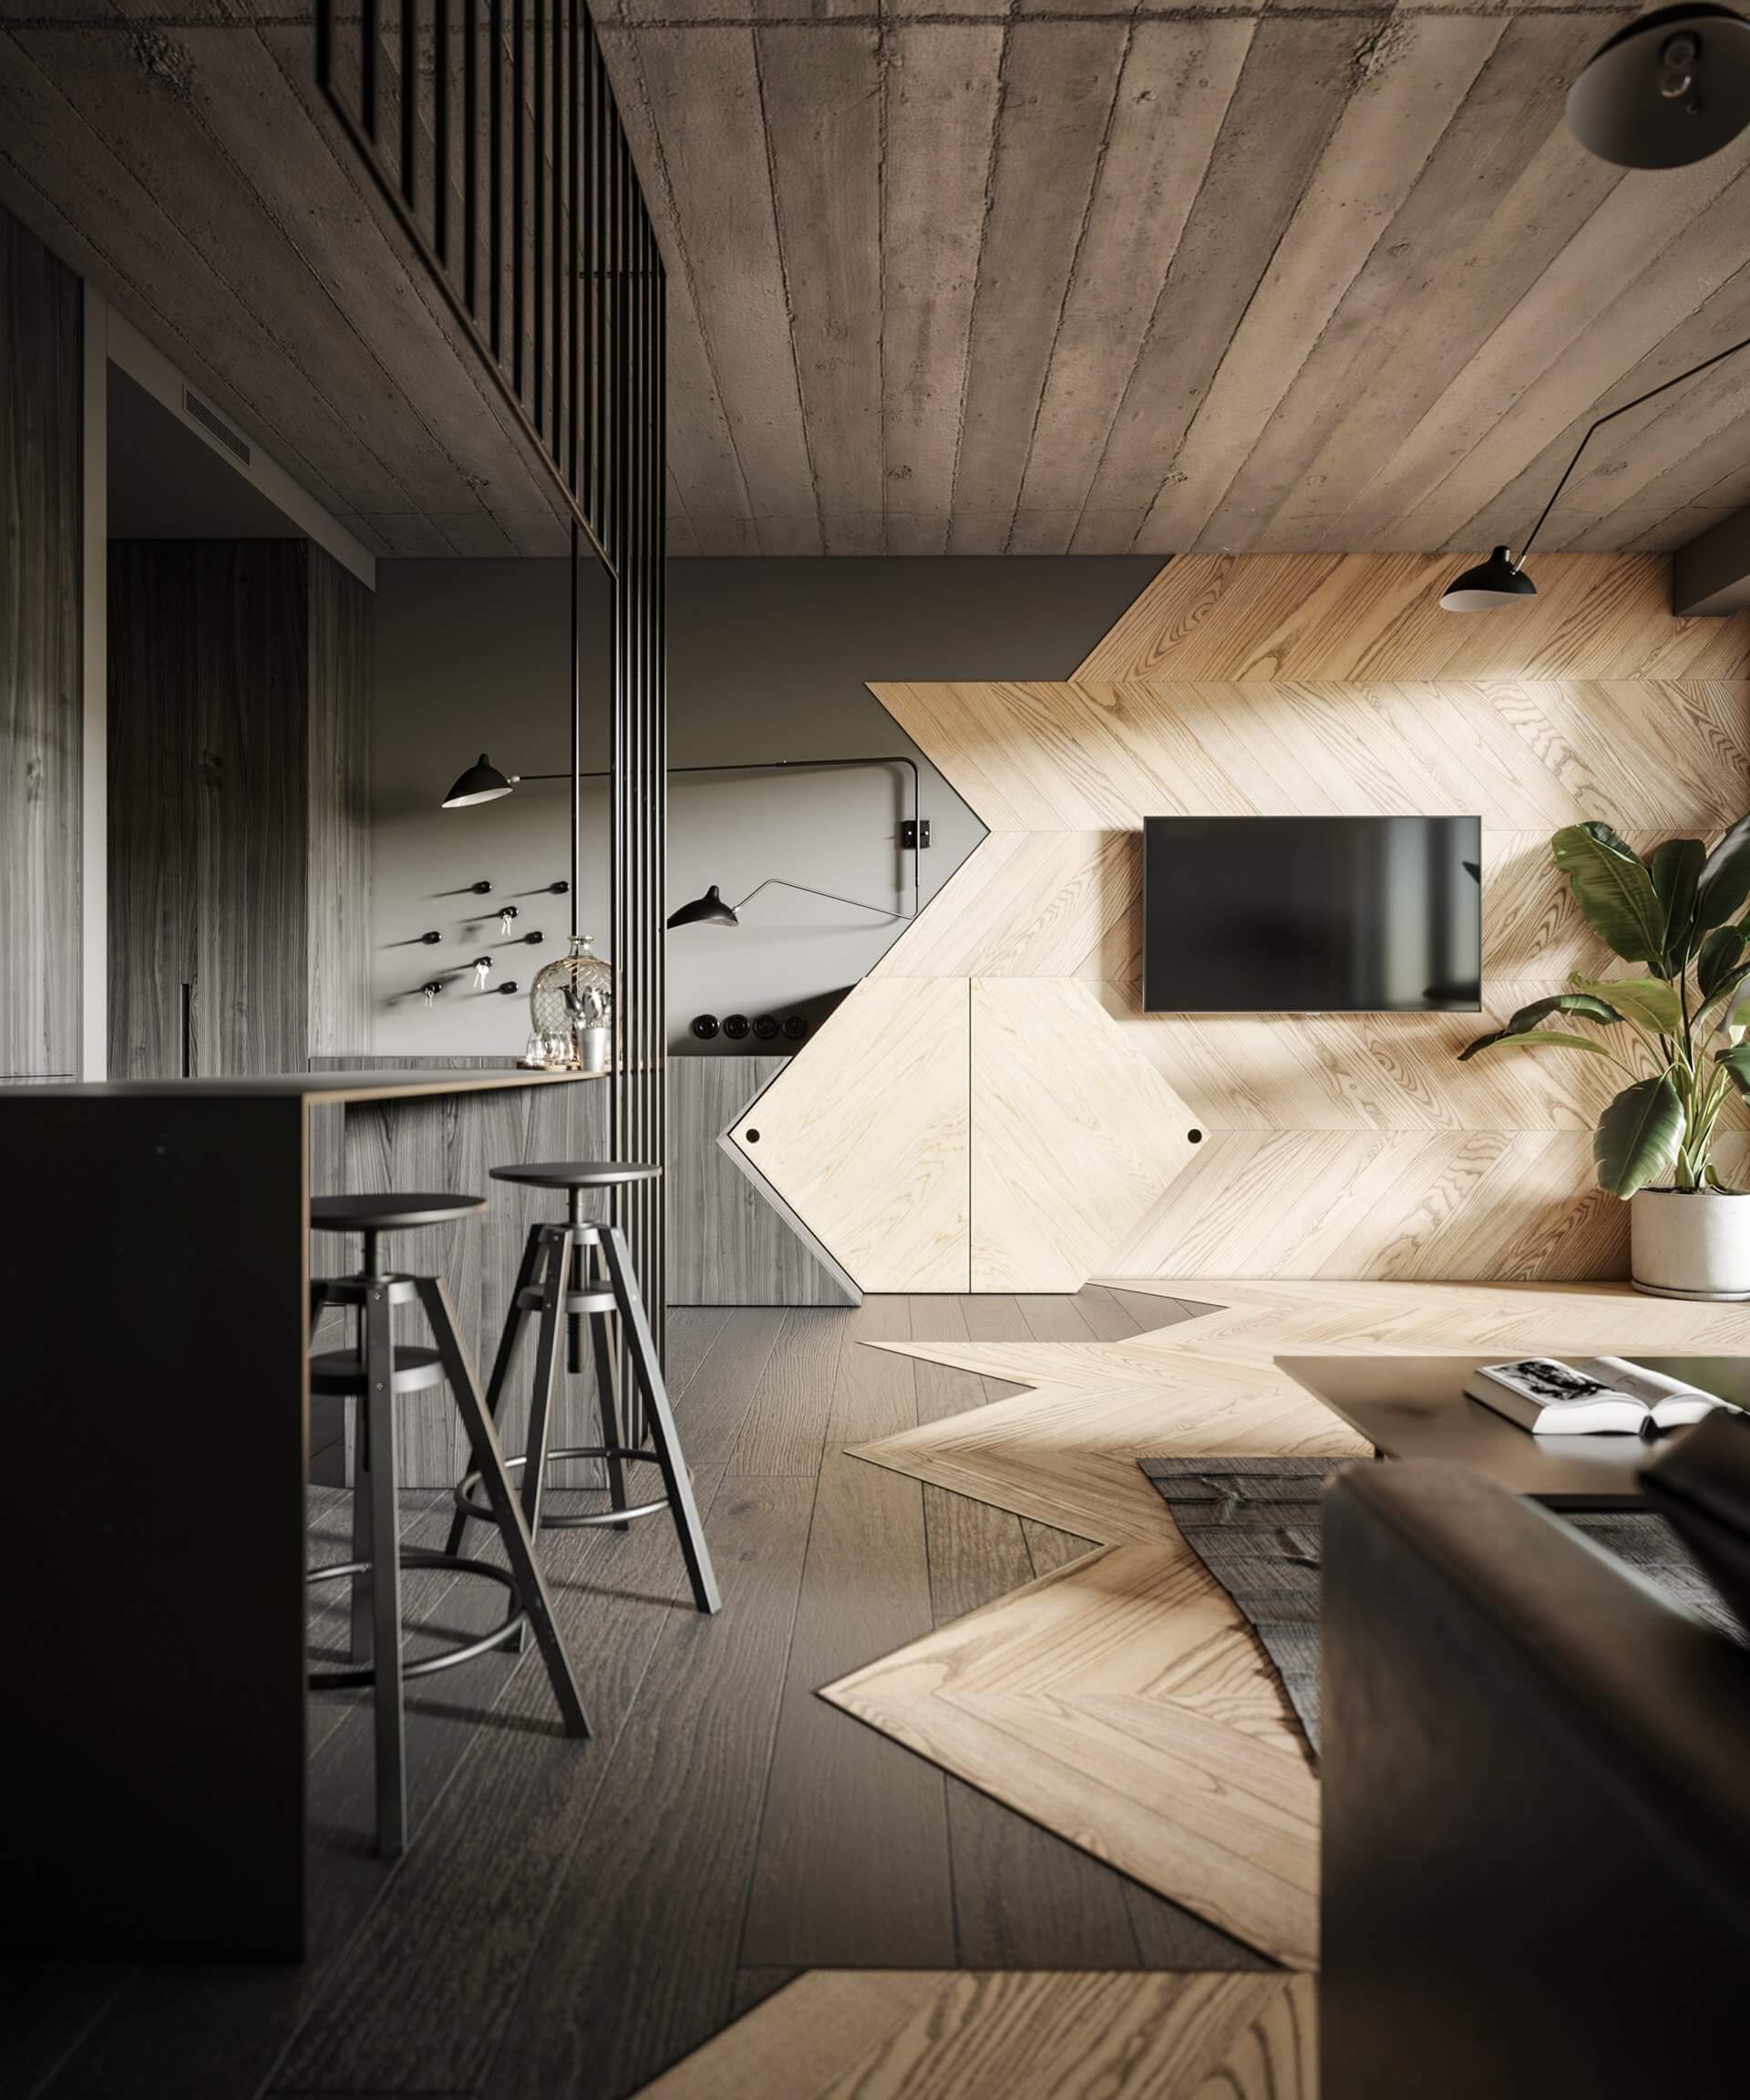 Haus 38 loft interior visualization kitchen dining area and living room - cgi visualization